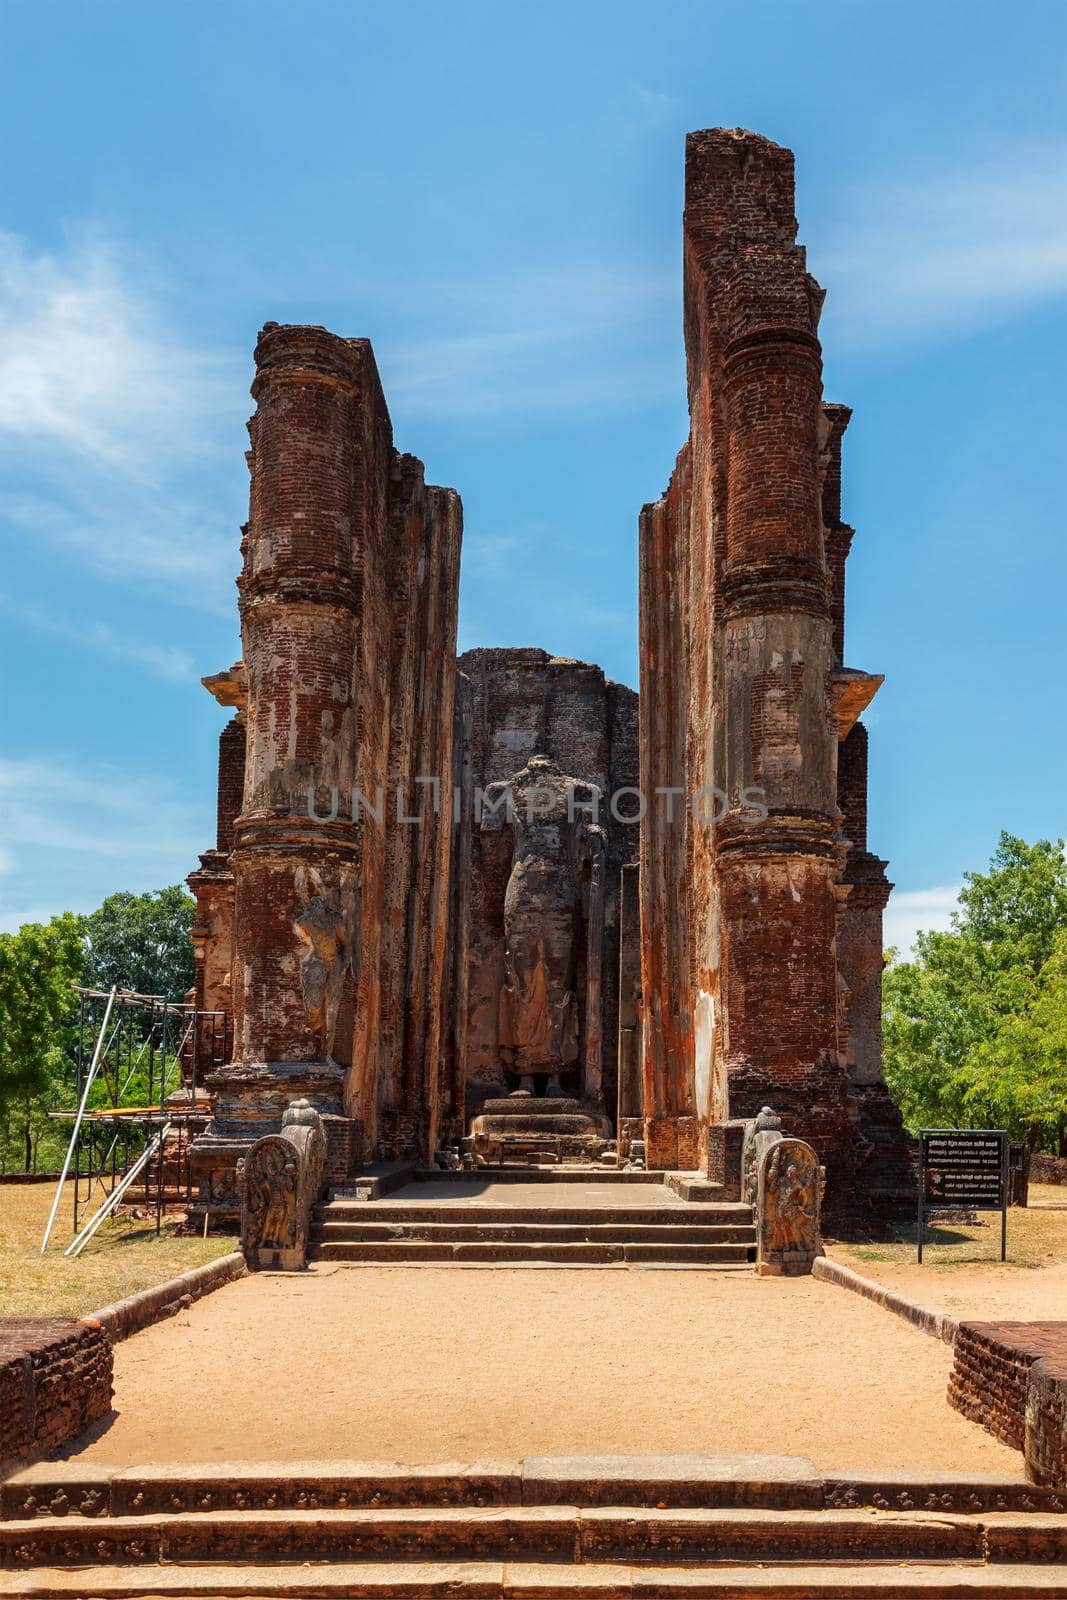 Ruins of Lankatilaka Vihara - temple with Buddha image. Ancient city of Pollonaruwa - famous tourist attraction and archaelogical site, Sri Lanka